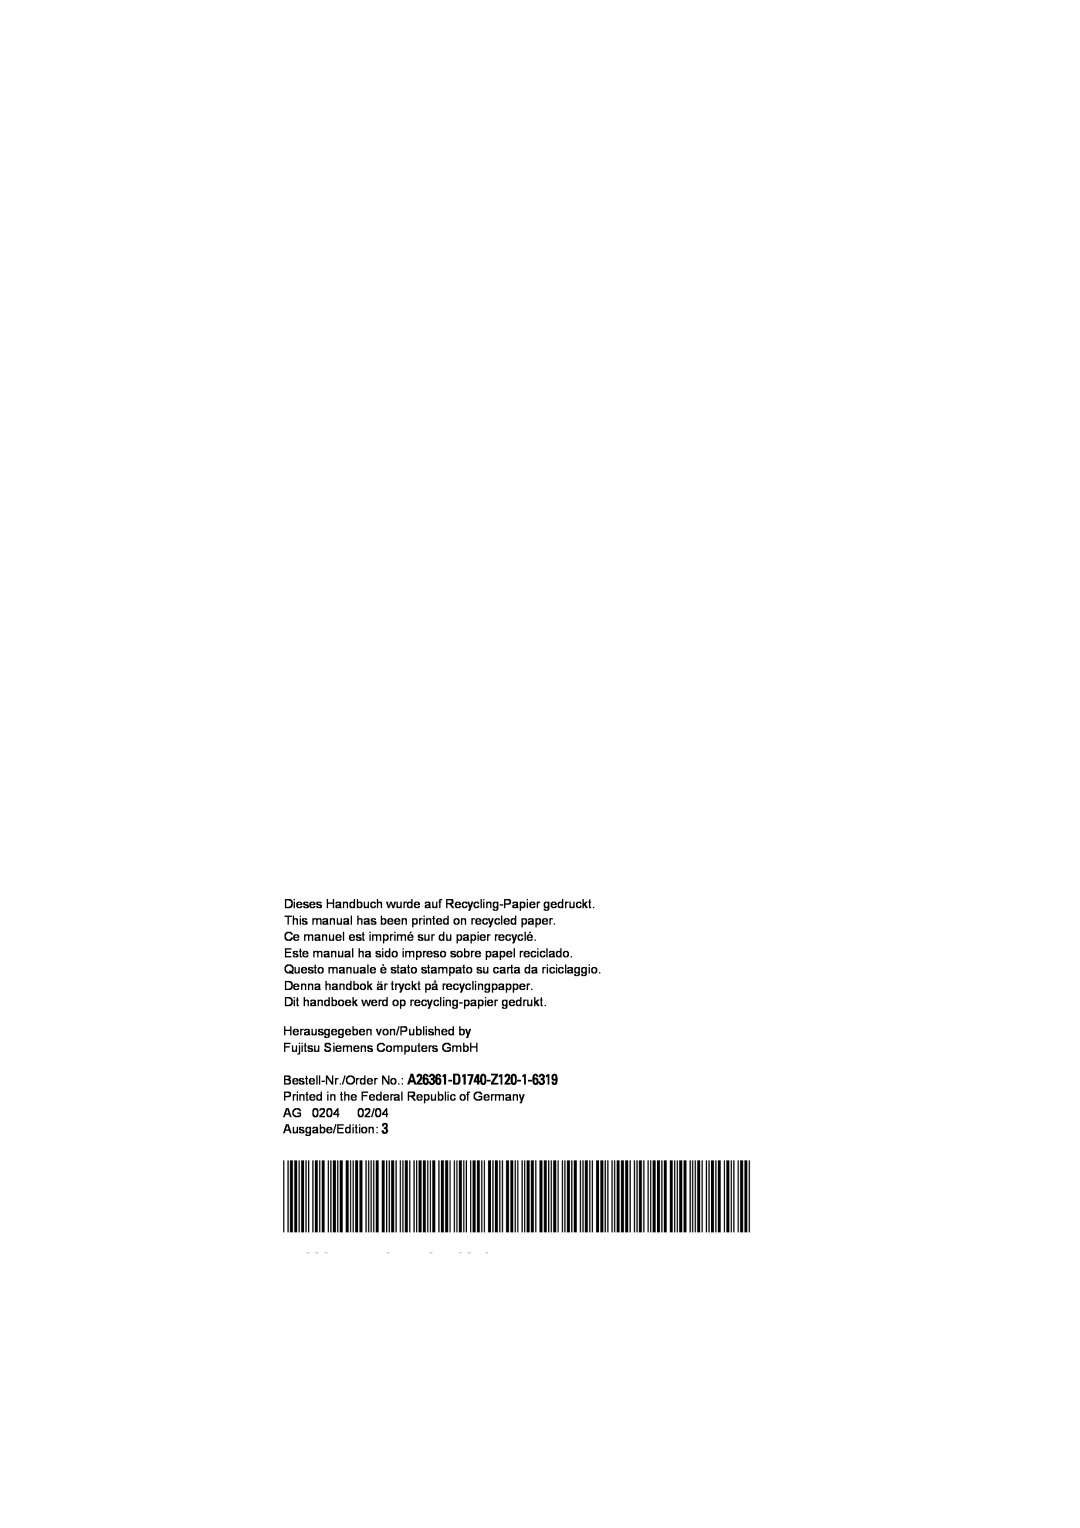 Fujitsu technical manual Bestell-Nr./Order No. A26361-D1740-Z120-1-6319 